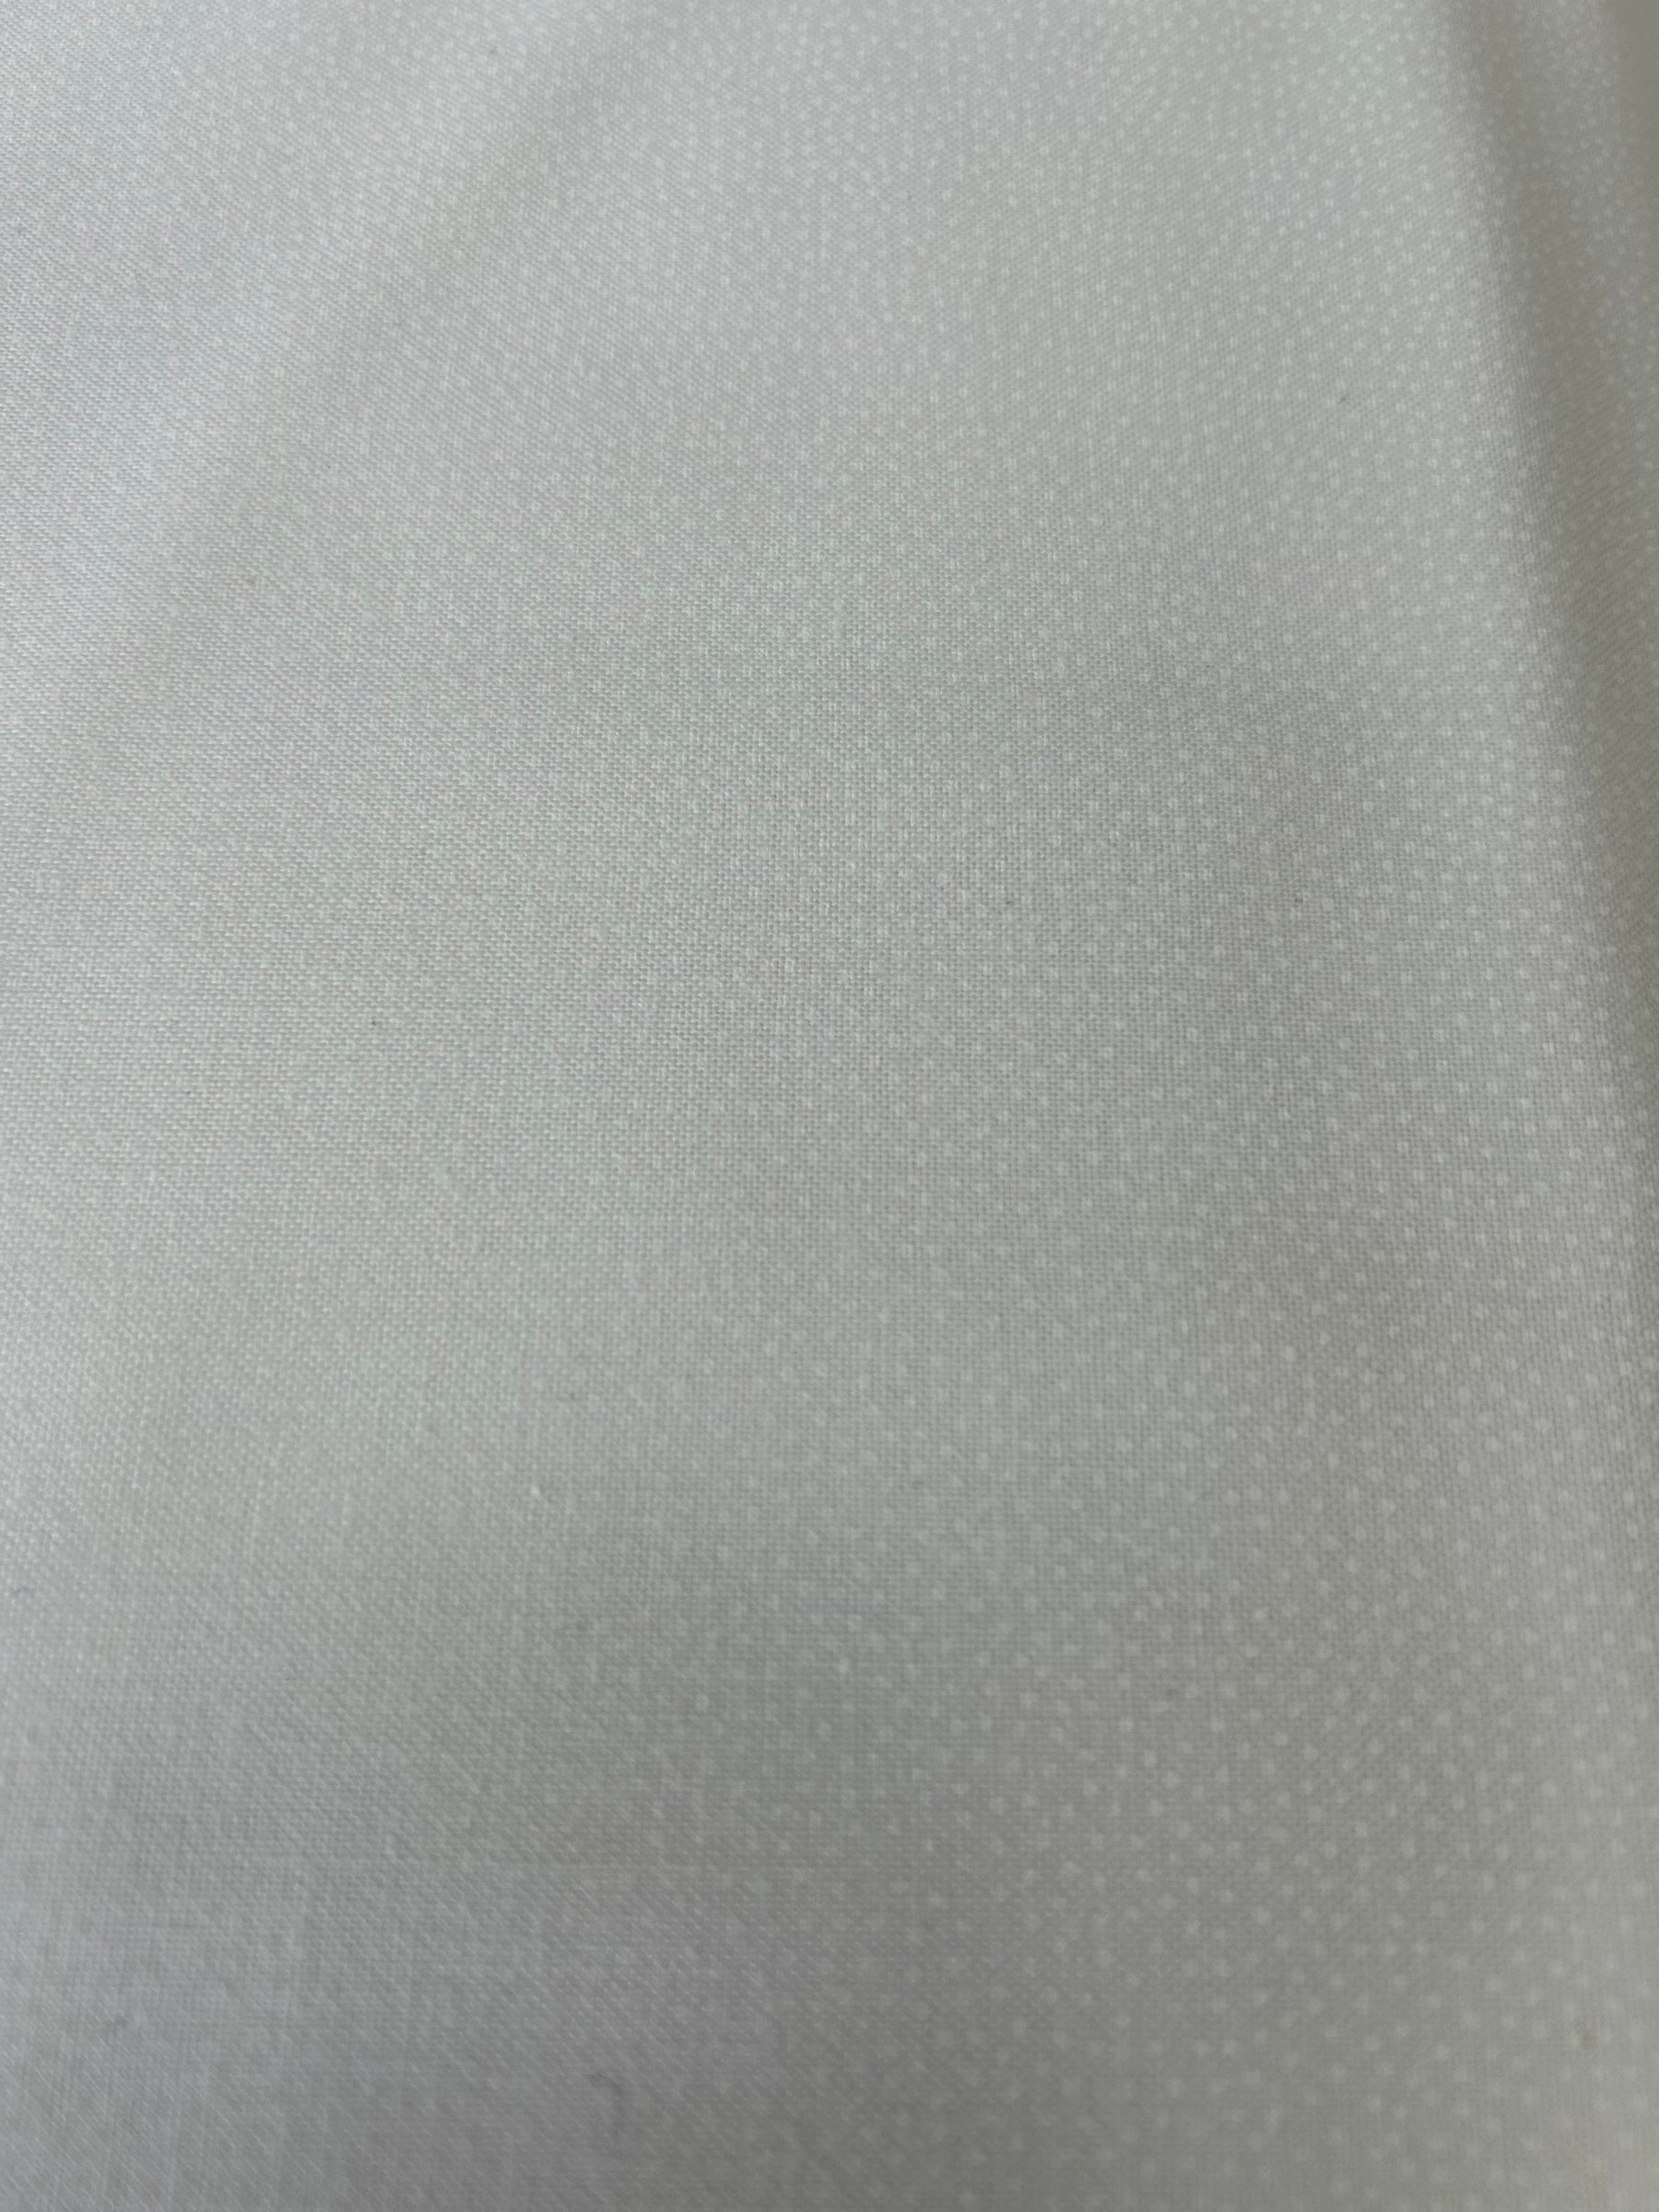 Tiny Dot White on White Cotton by Makower